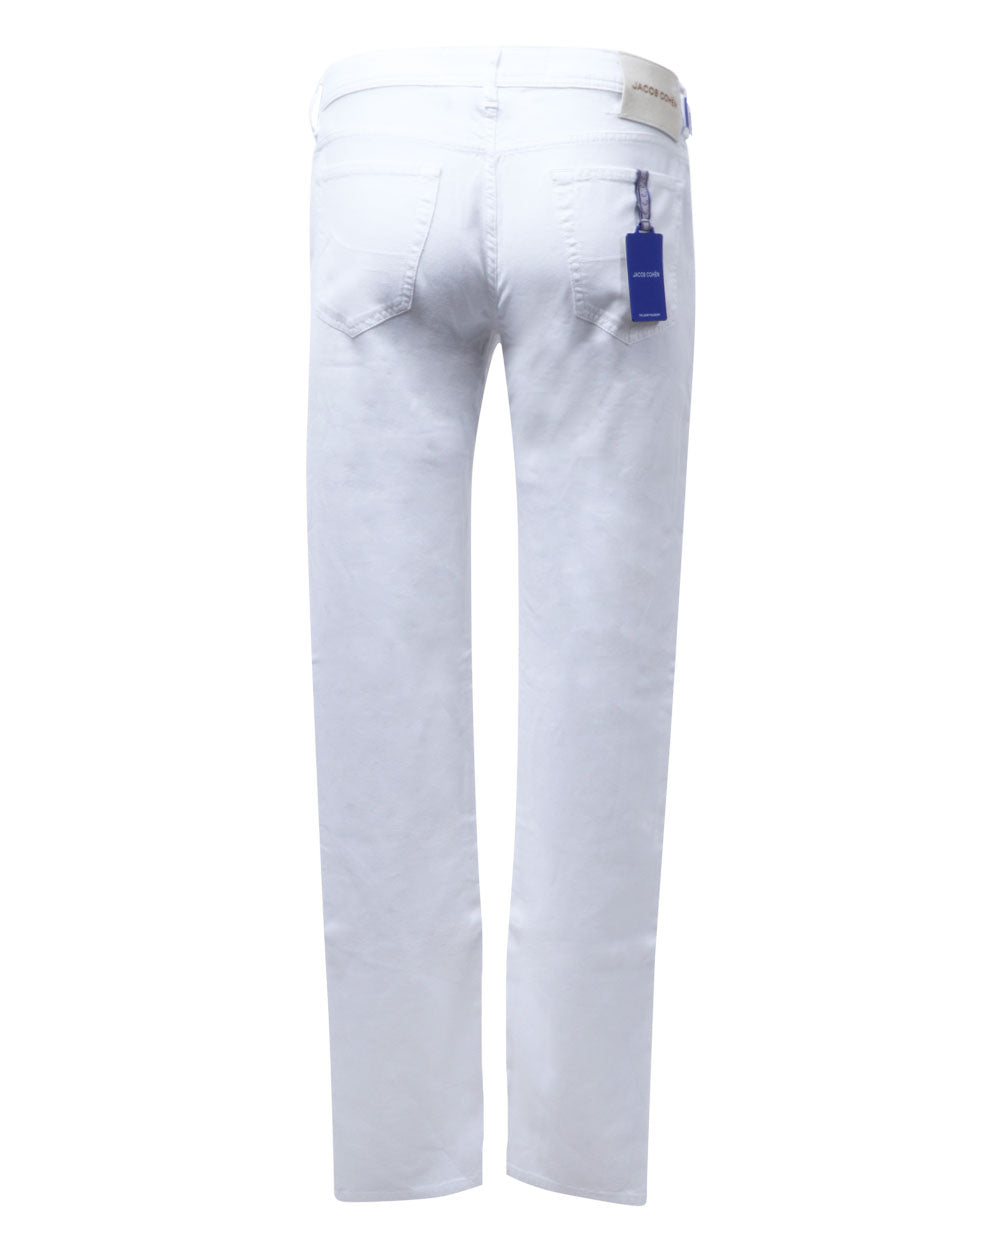 5 Pocket Pant in Optical White